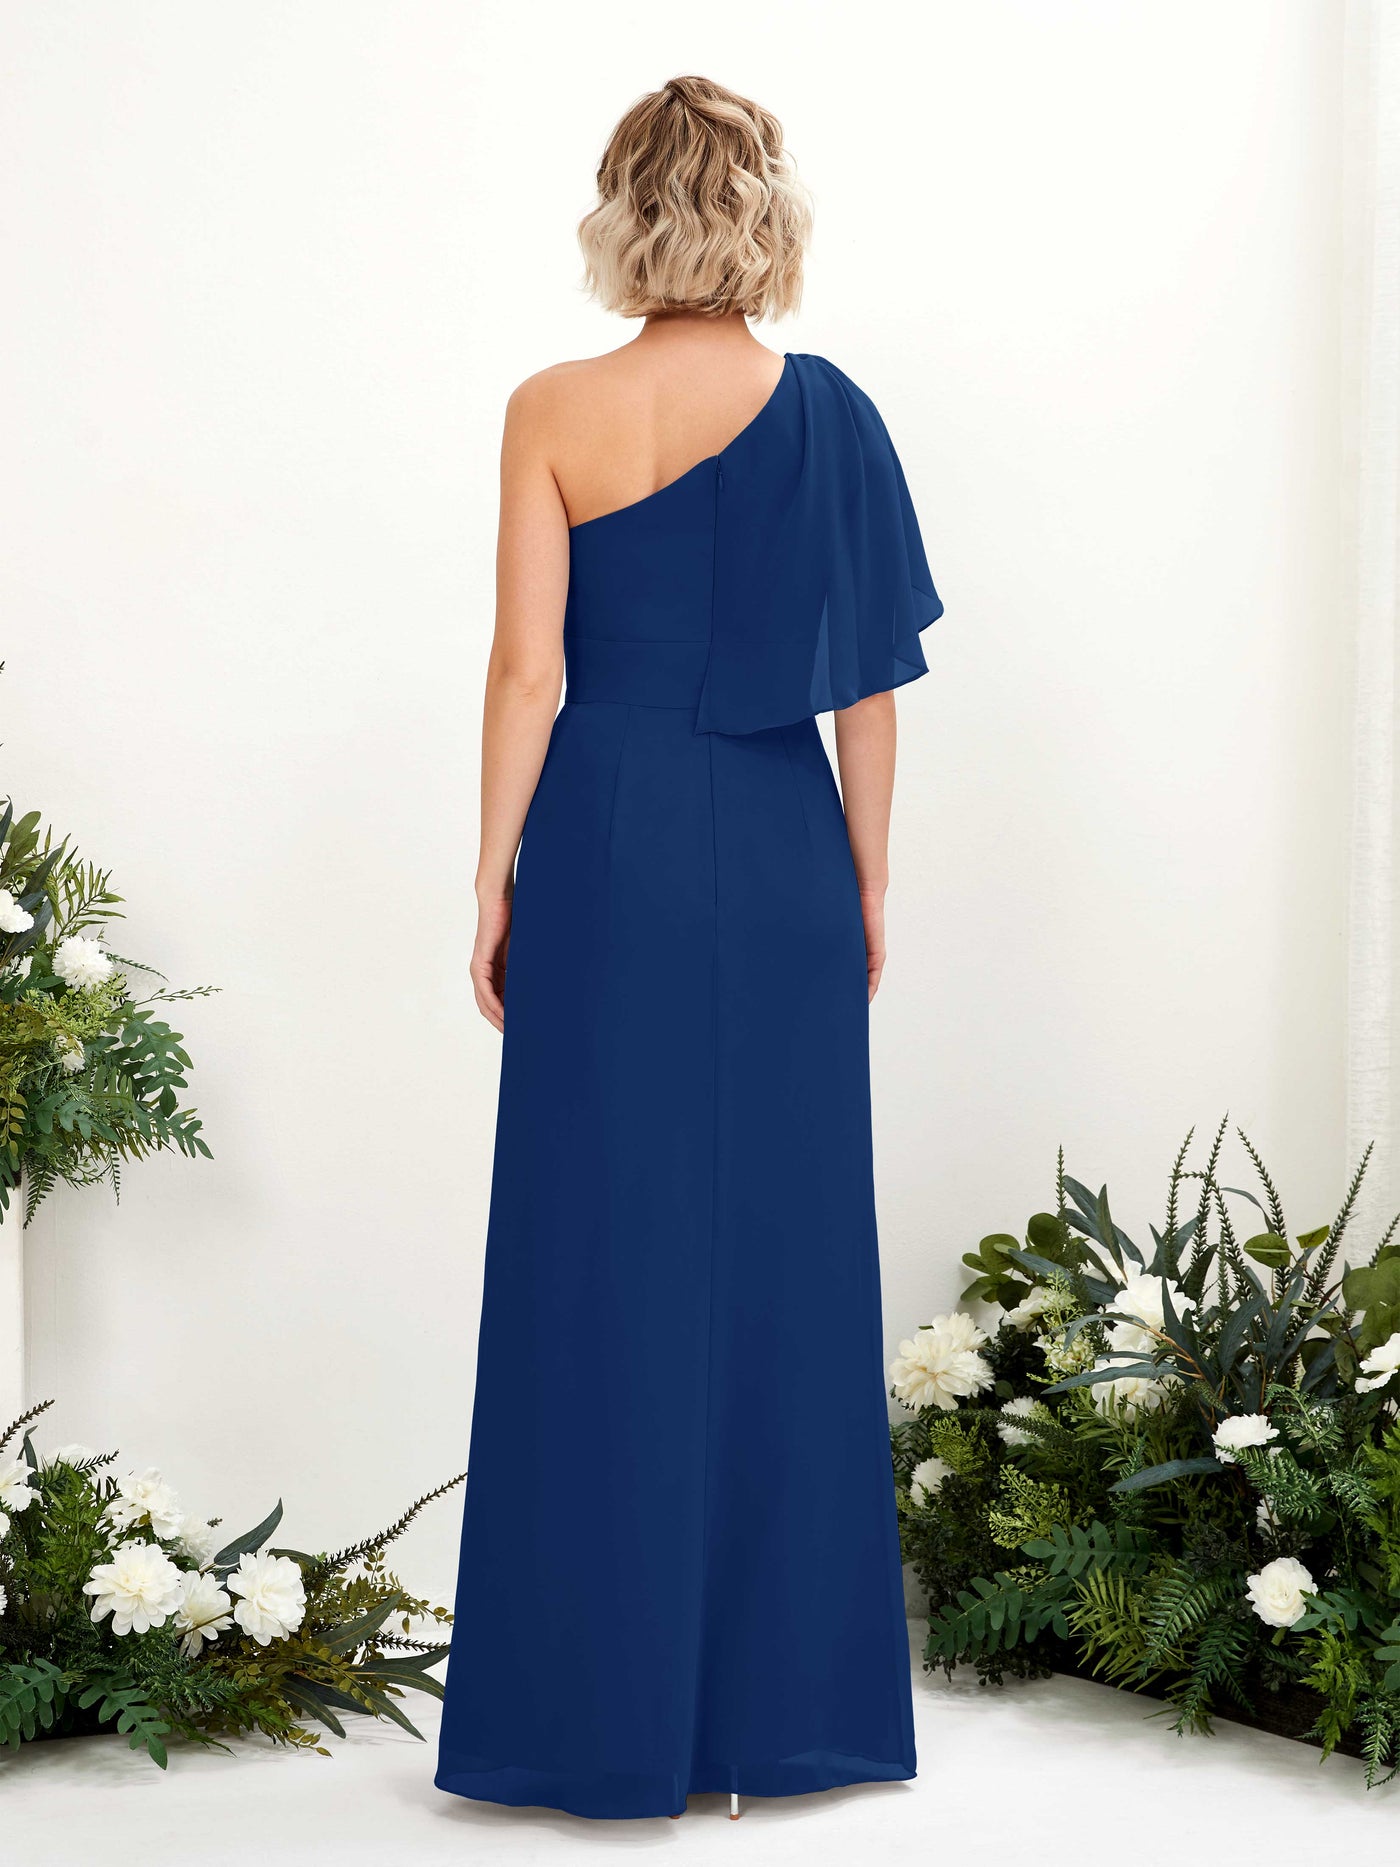 Royal Blue Bridesmaid Dresses Bridesmaid Dress Ball Gown Chiffon Full Length Short Sleeves Wedding Party Dress (81223737)#color_royal-blue